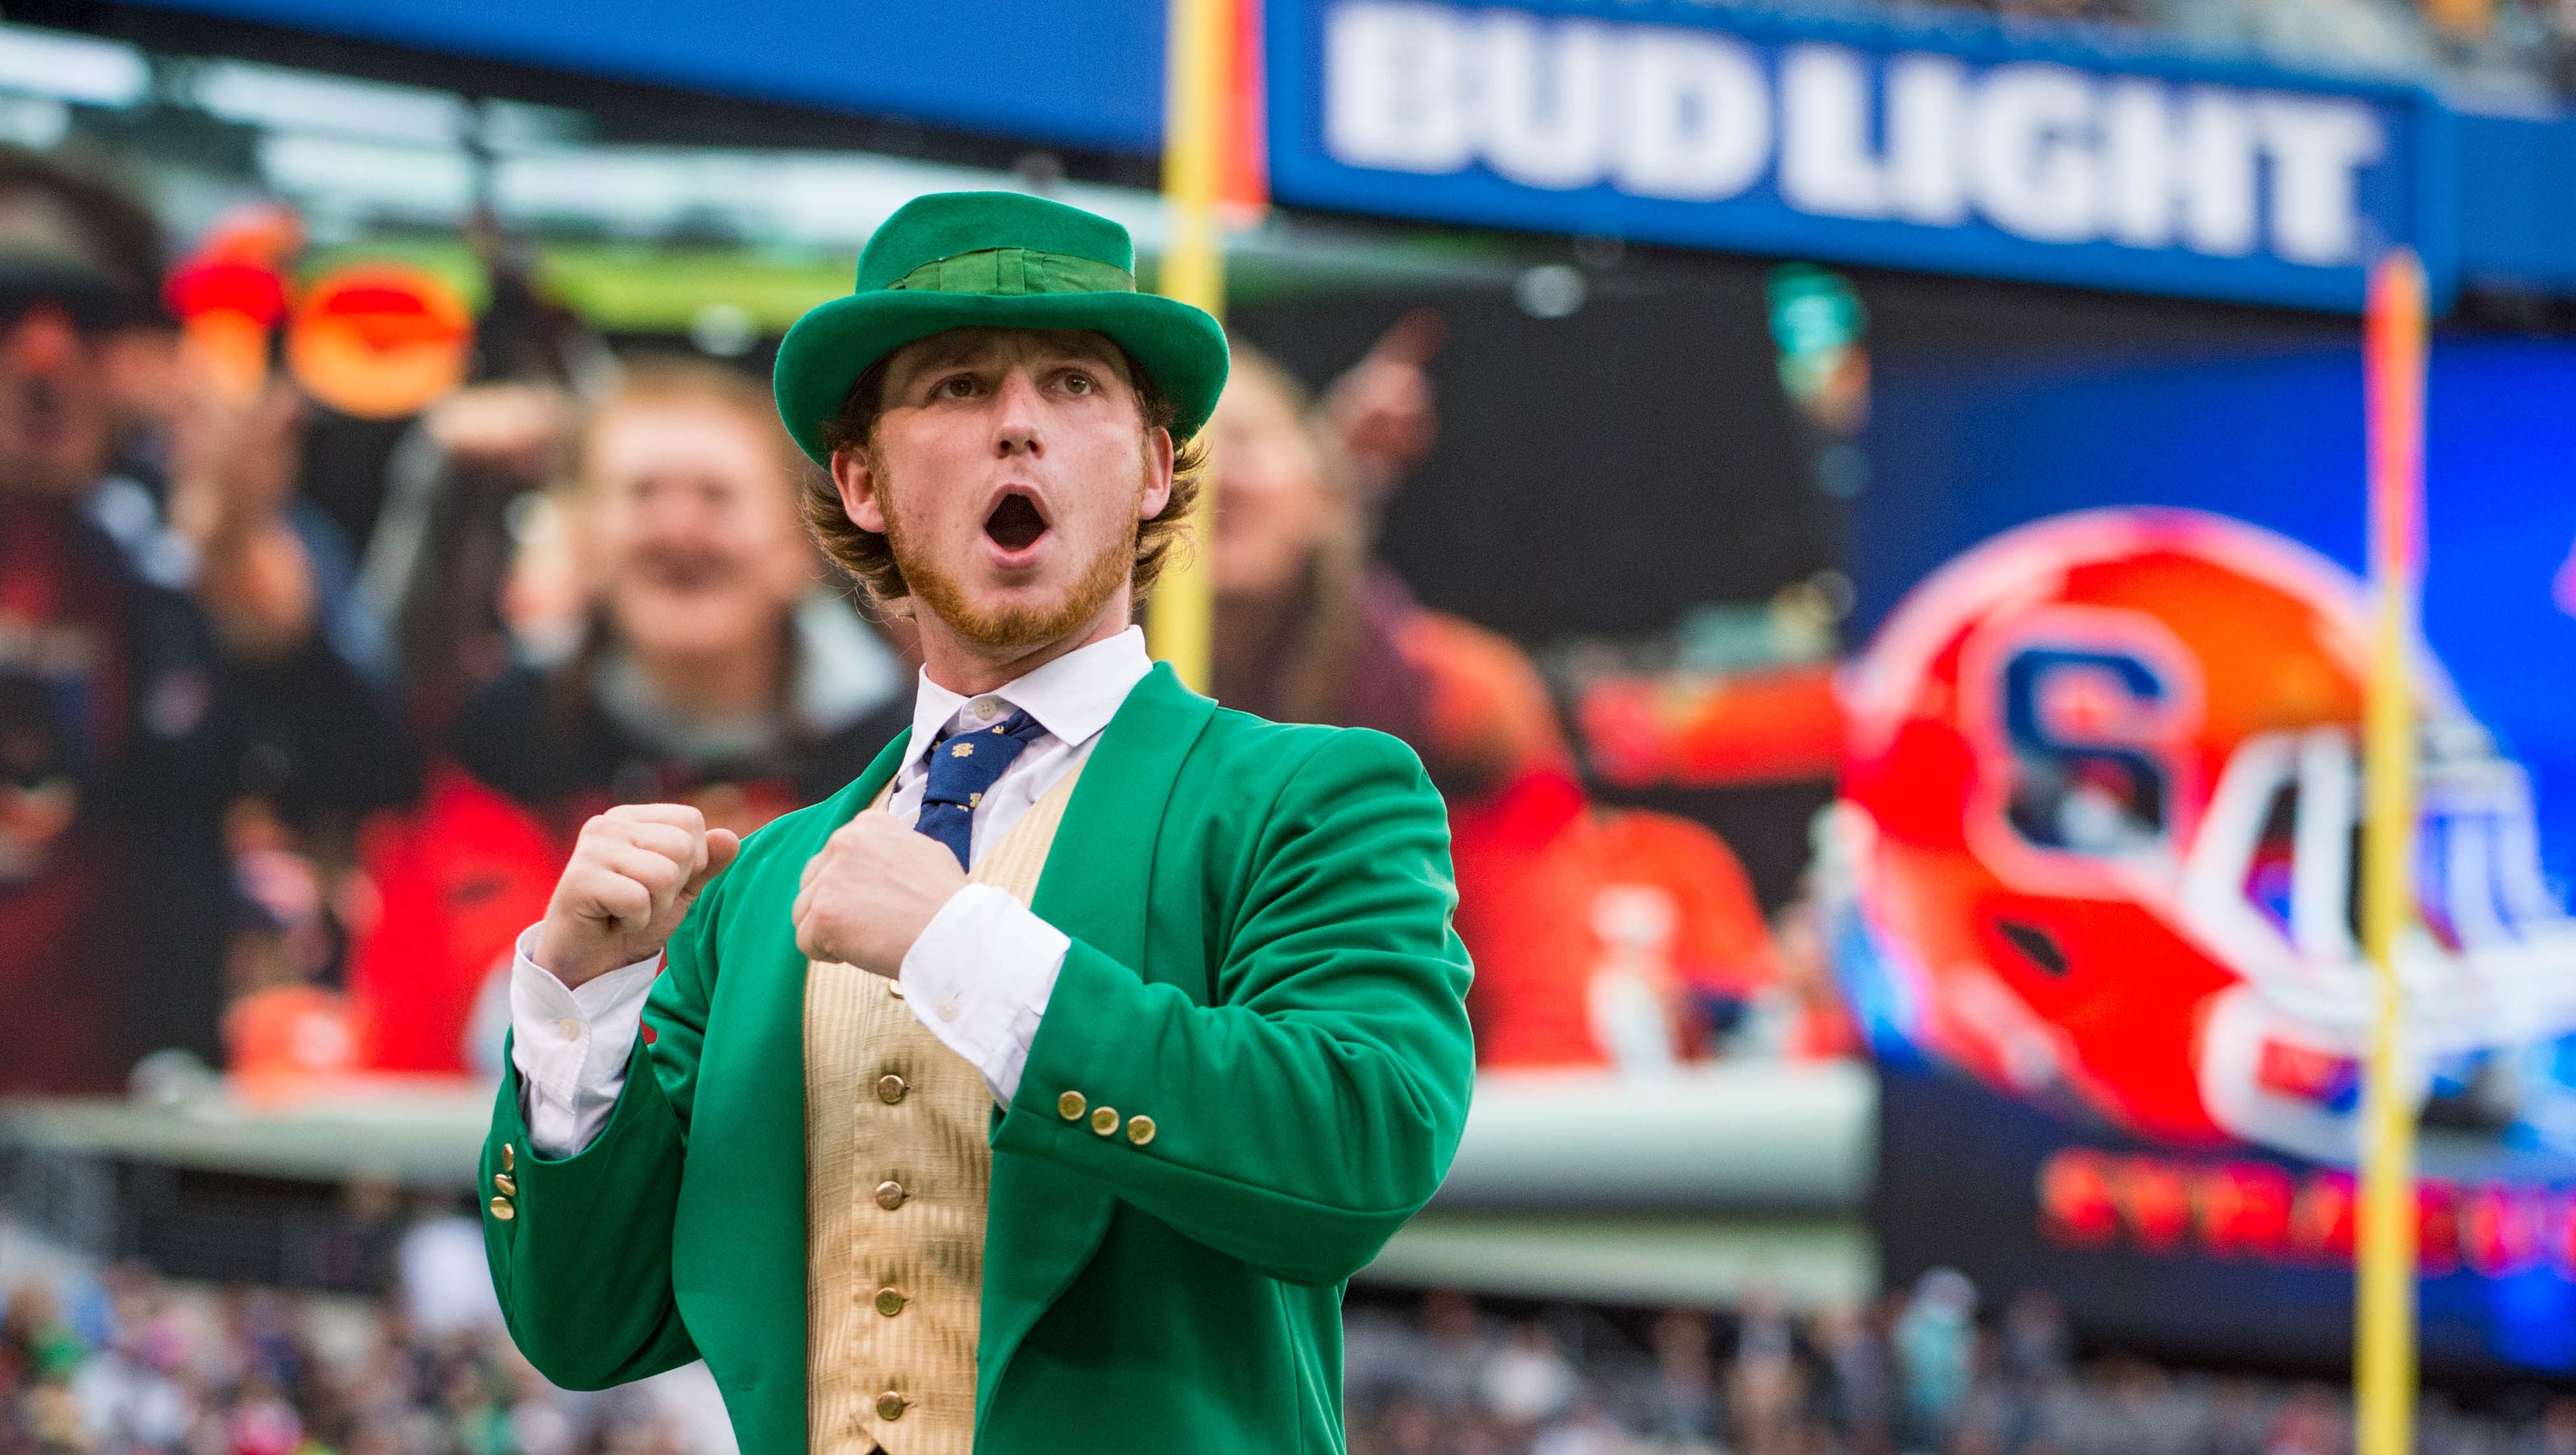 Notre Dame defends Fighting Irish leprechaun mascot, ranked offensive